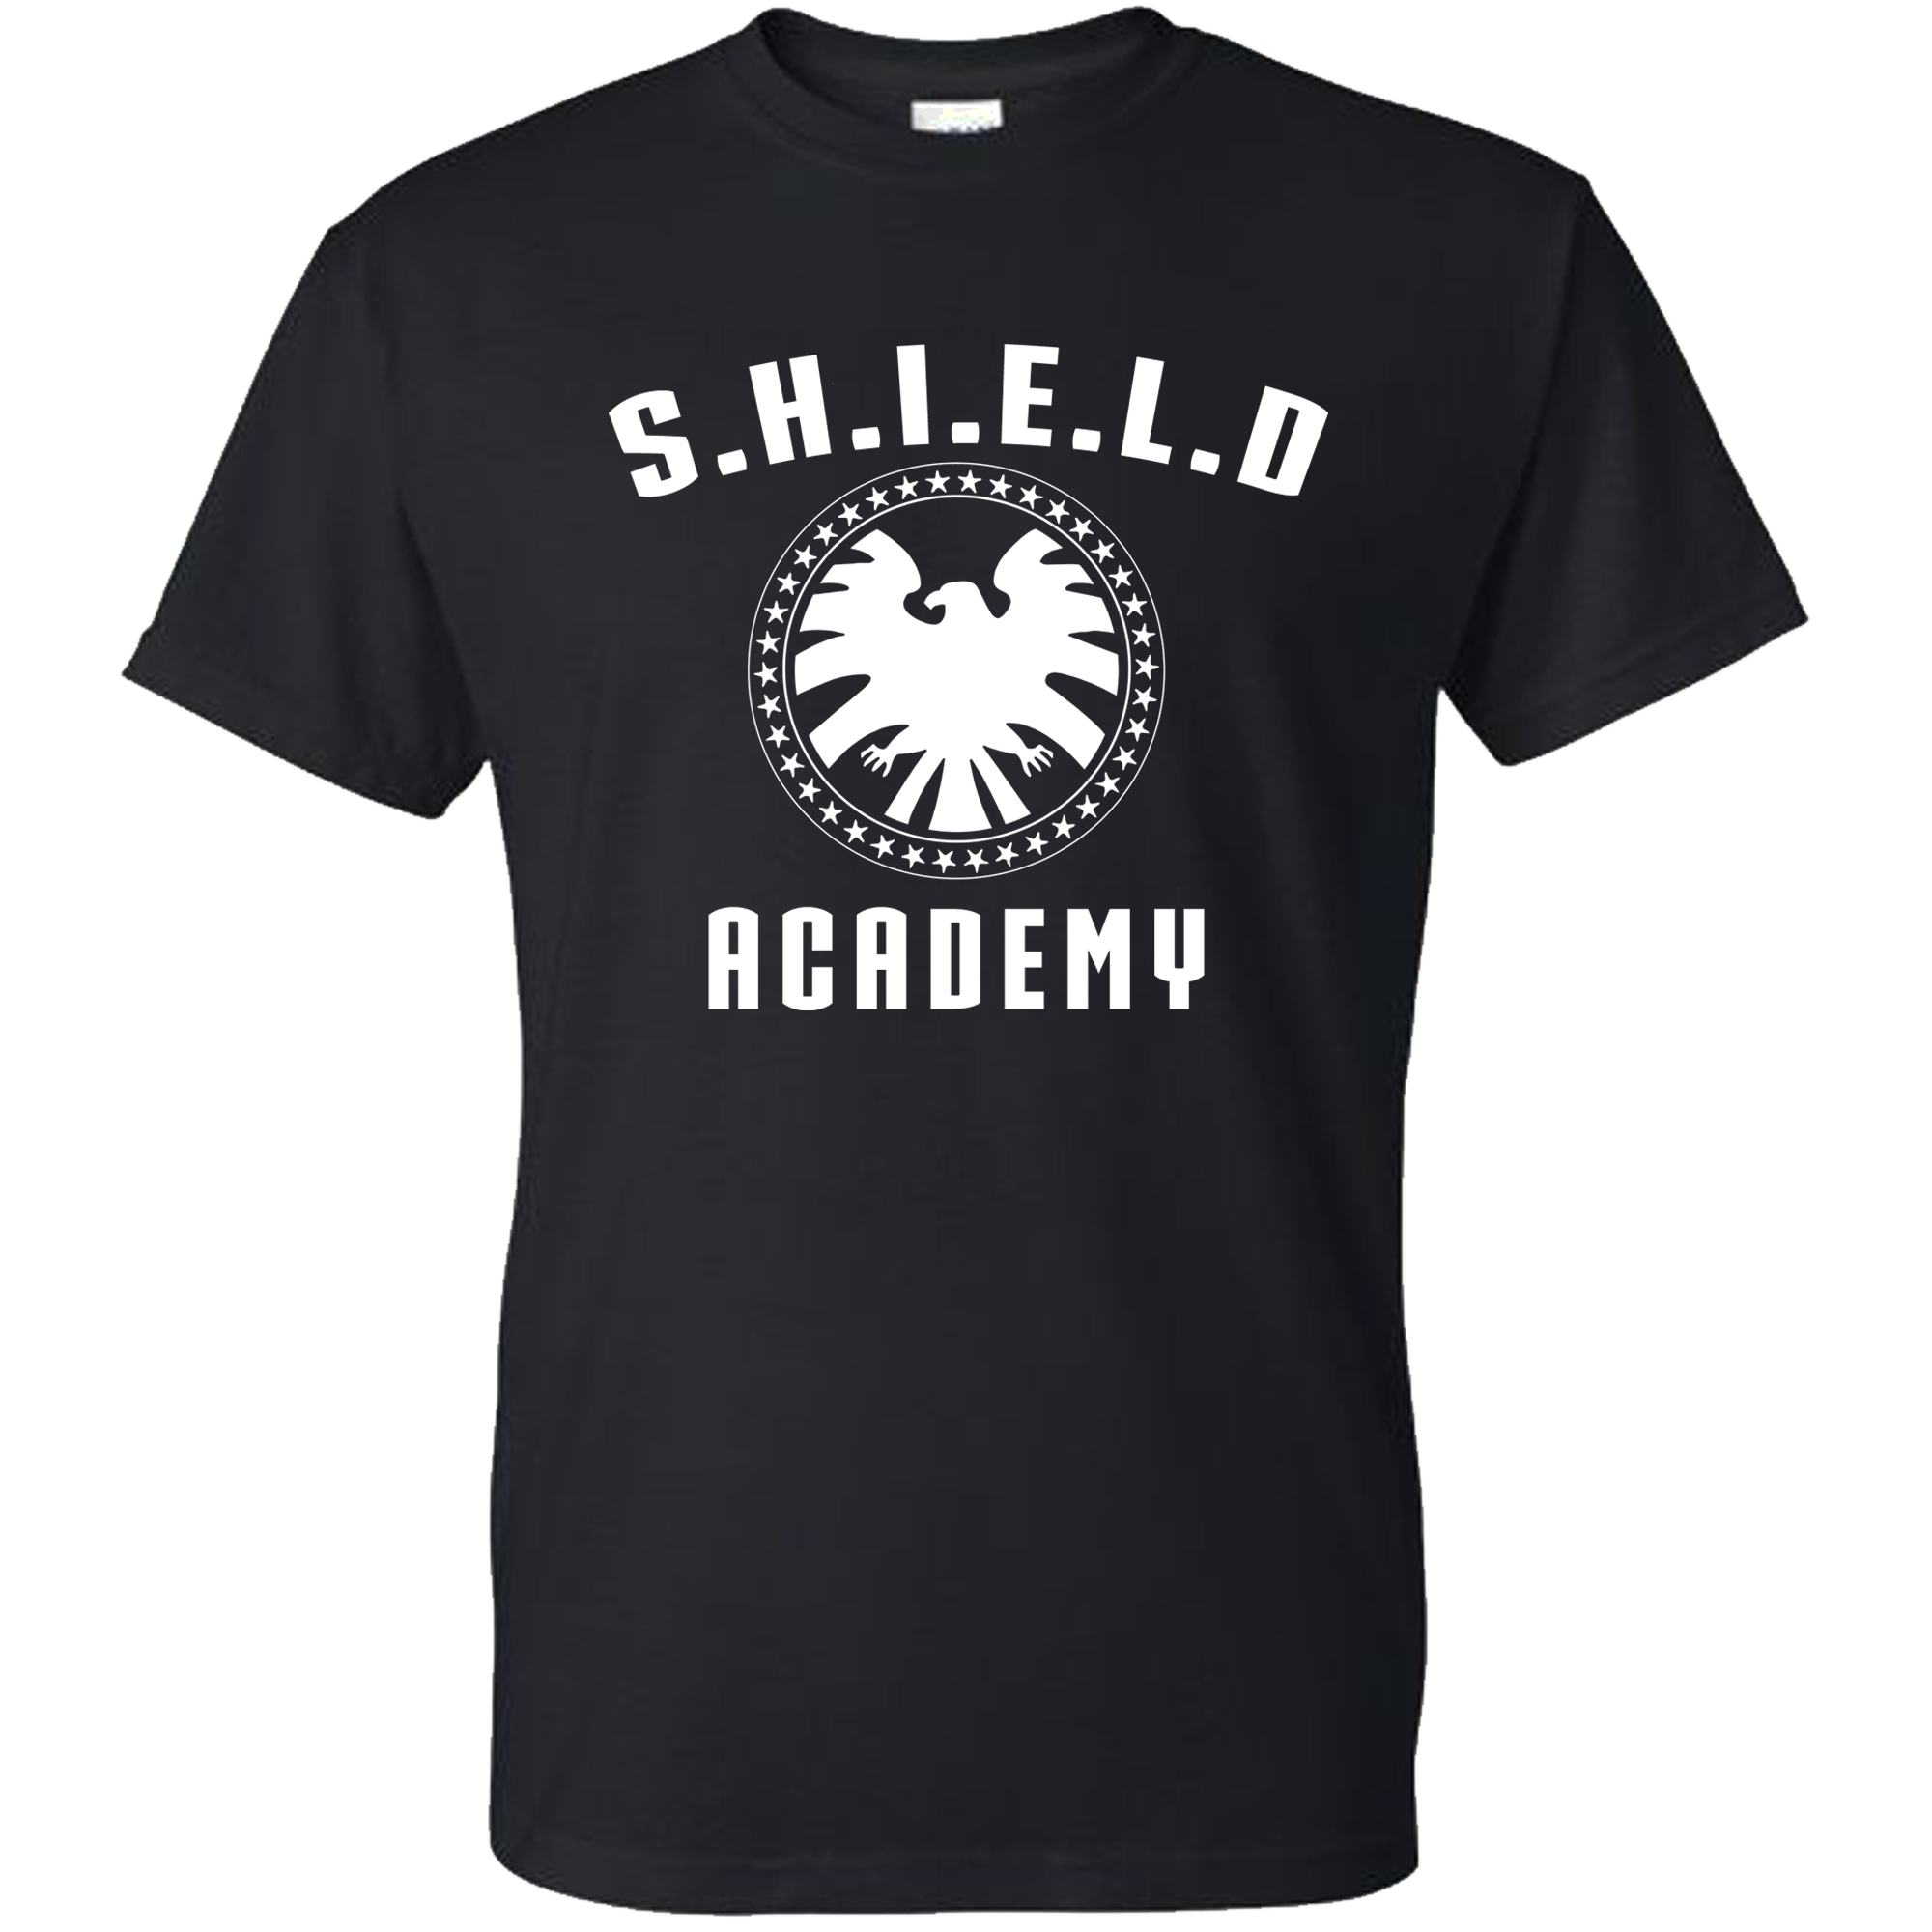 Shield Academy Shirt, Shield Shirt, Nick Fury T-Shirt, Avengers Tee Shirt, Stark Industries Shirt